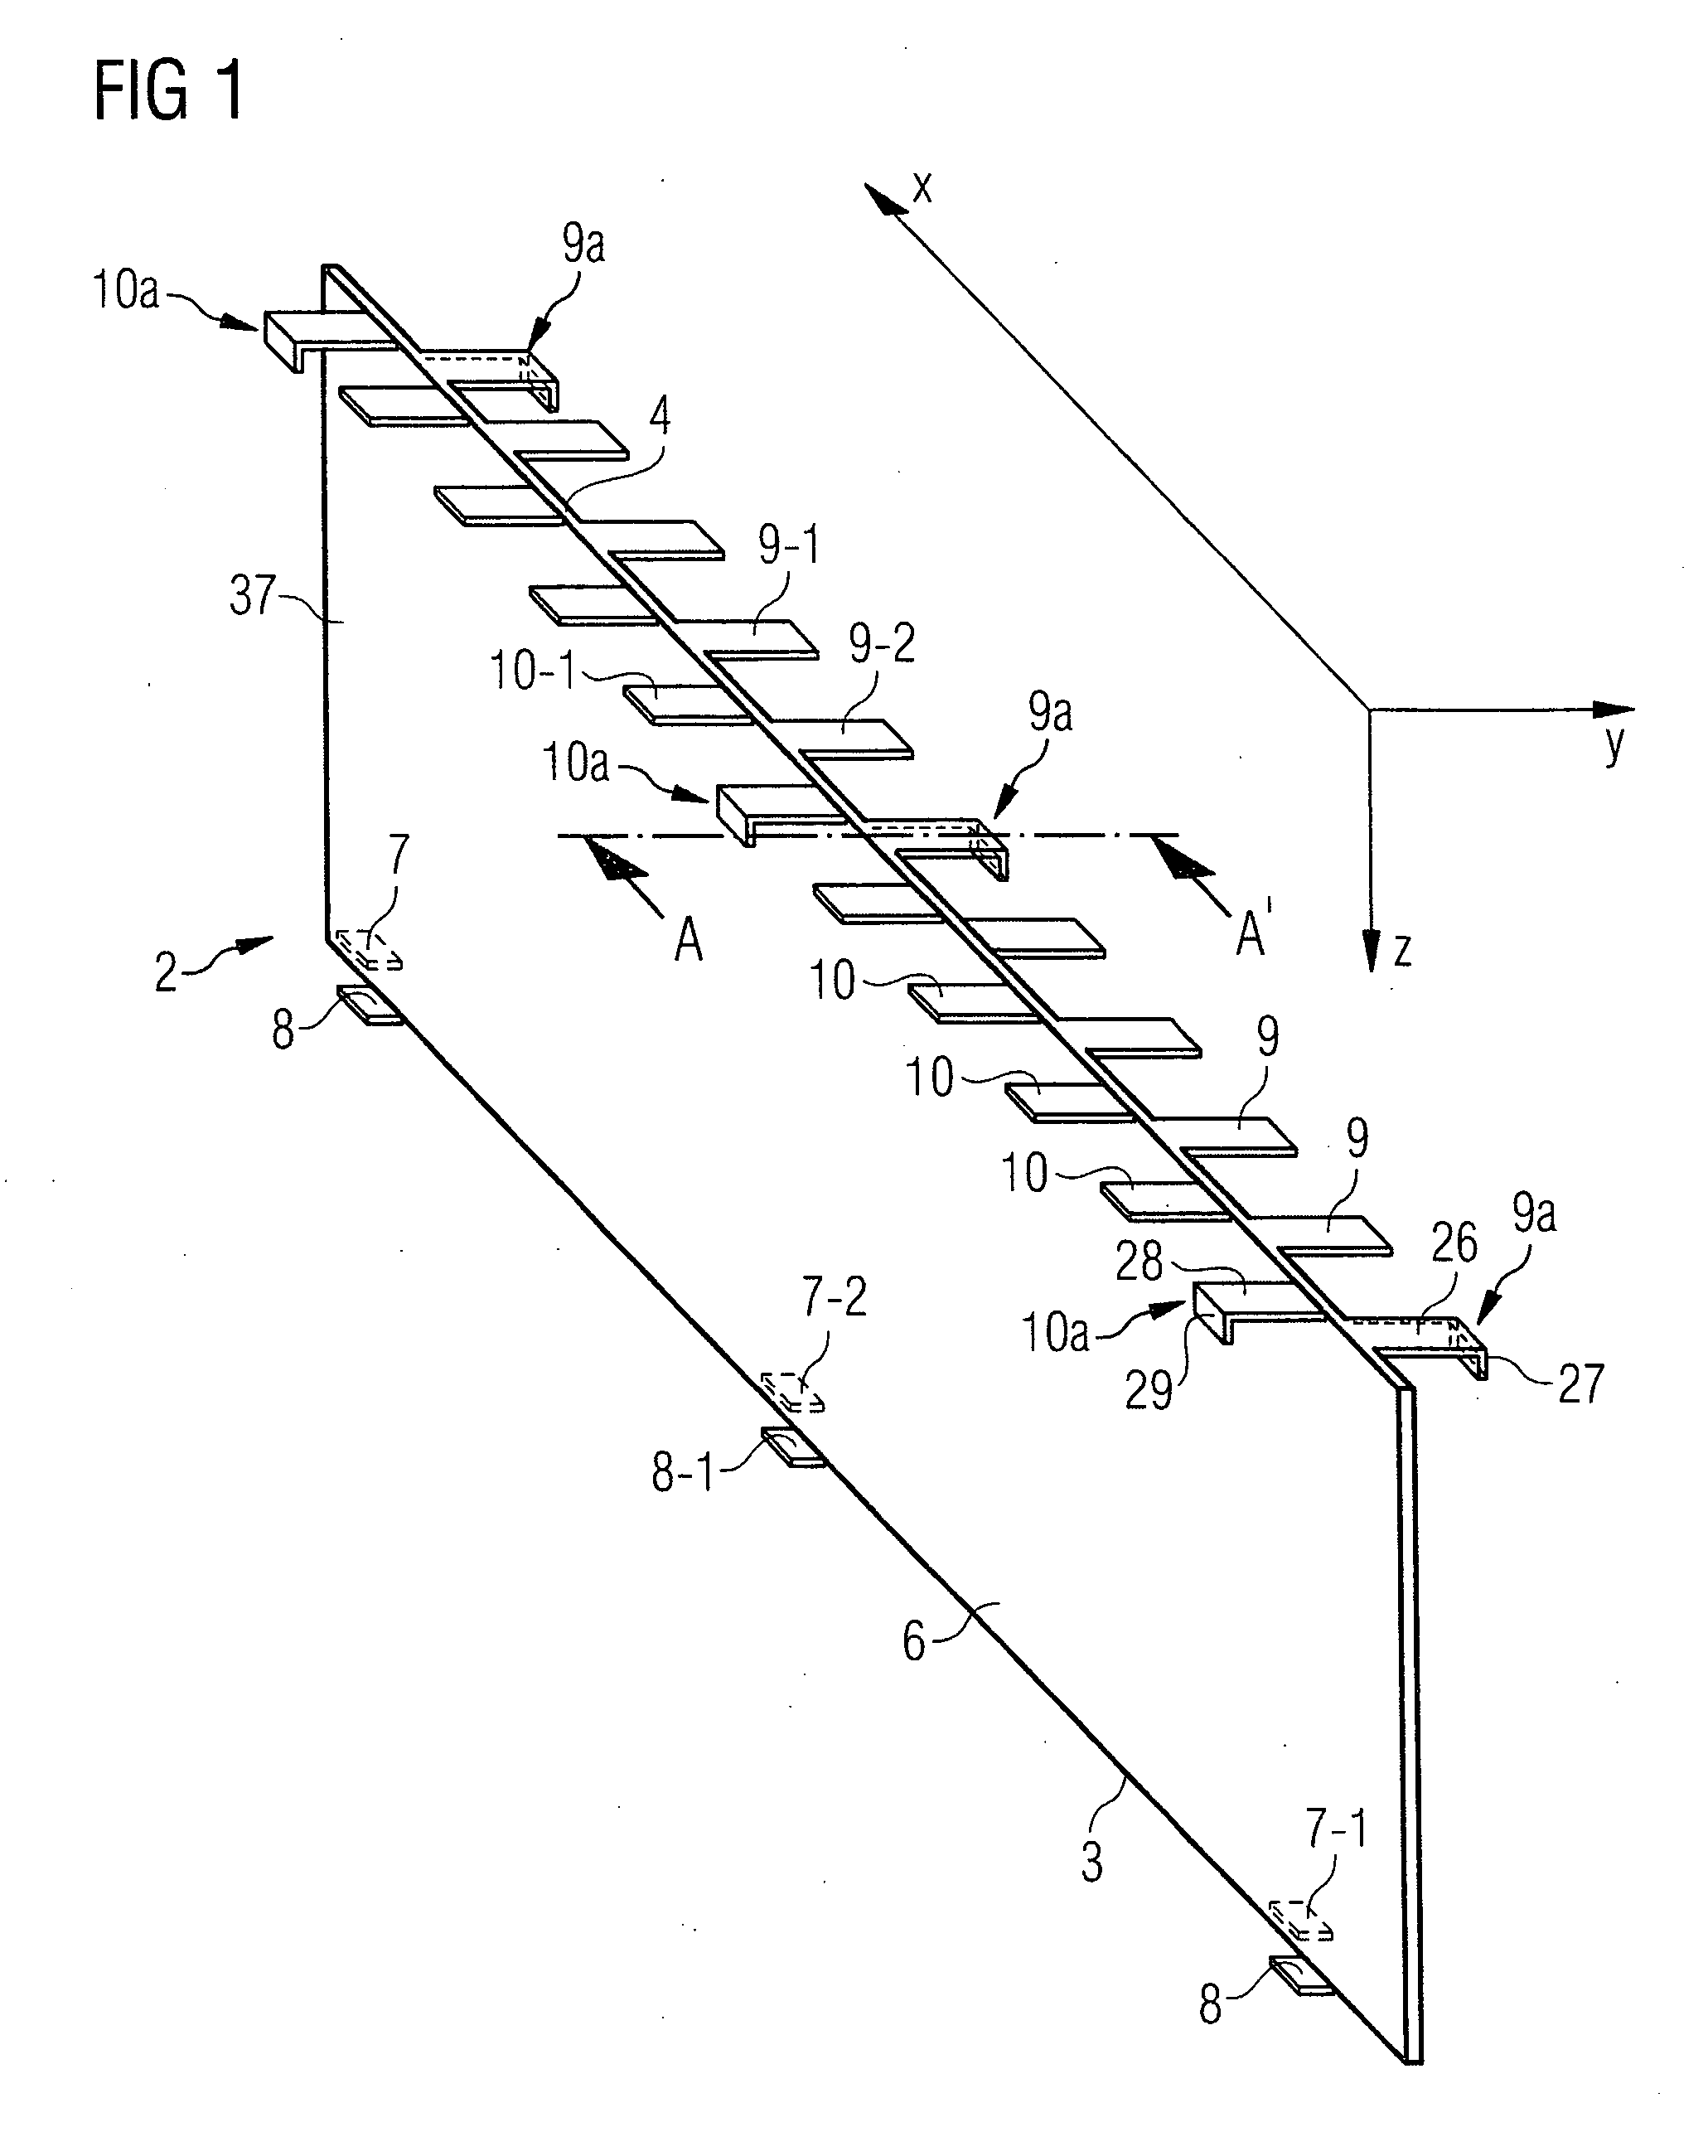 Circuit board arrangement including heat dissipater